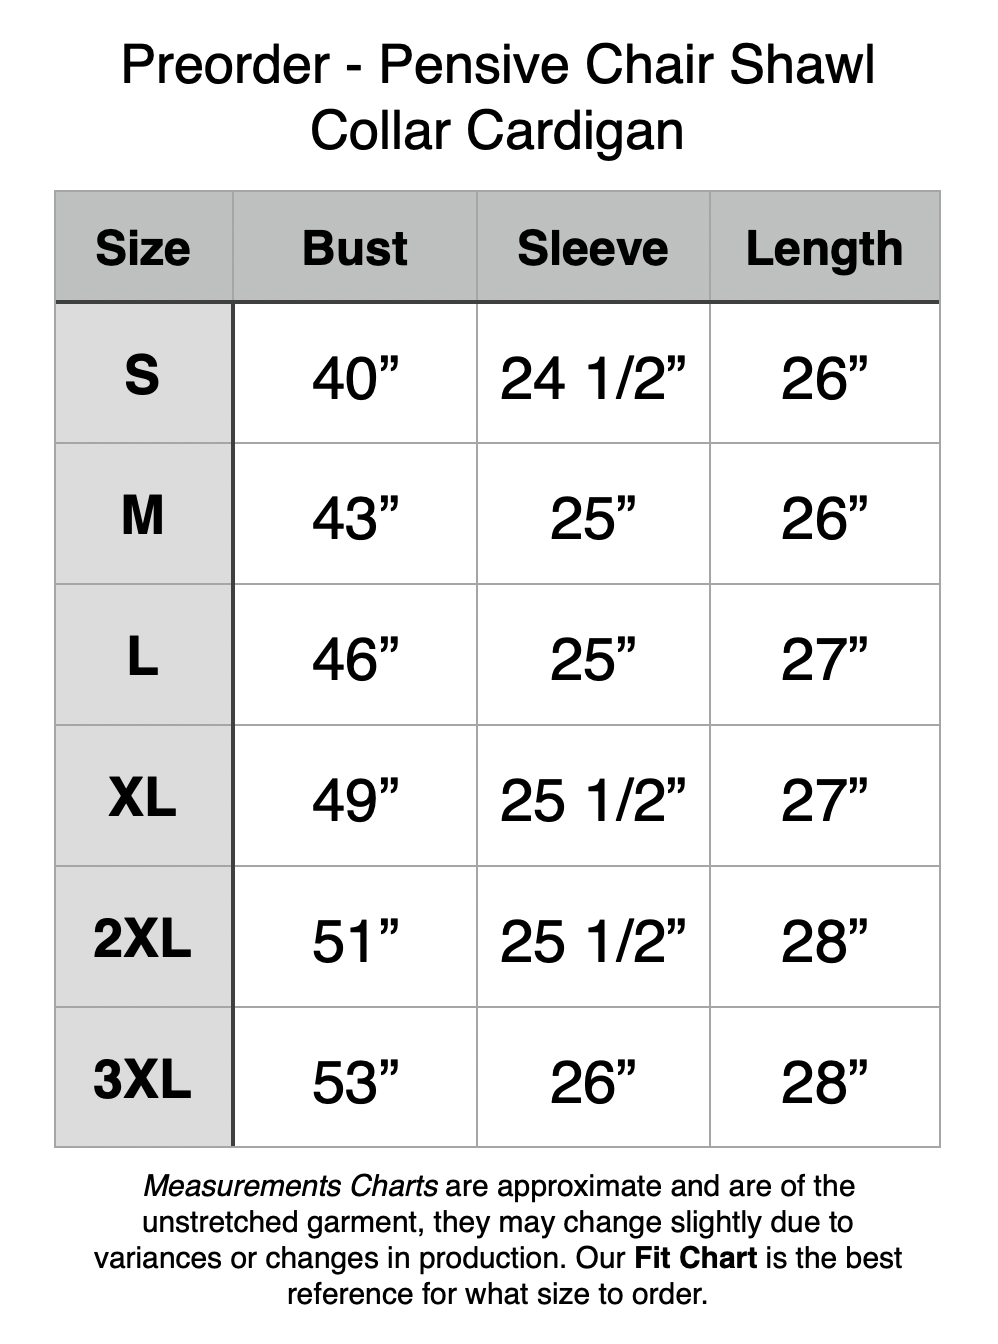 Preorder - Pensive Chair Shawl Collar Cardigan. S: 40” Bust, 24.5” Sleeve, 26” Length. M: 43” Bust, 25” Sleeve, 26” Length. L: 46” Bust, 25” Sleeve, 27” Length. XL: 49” Bust, 25.5” Sleeve, 27” Length. 2XL: 51” Bust, 25.5” Sleeve, 28” Length. 3XL: 53” Bust, 26” Sleeve, 28” Length.